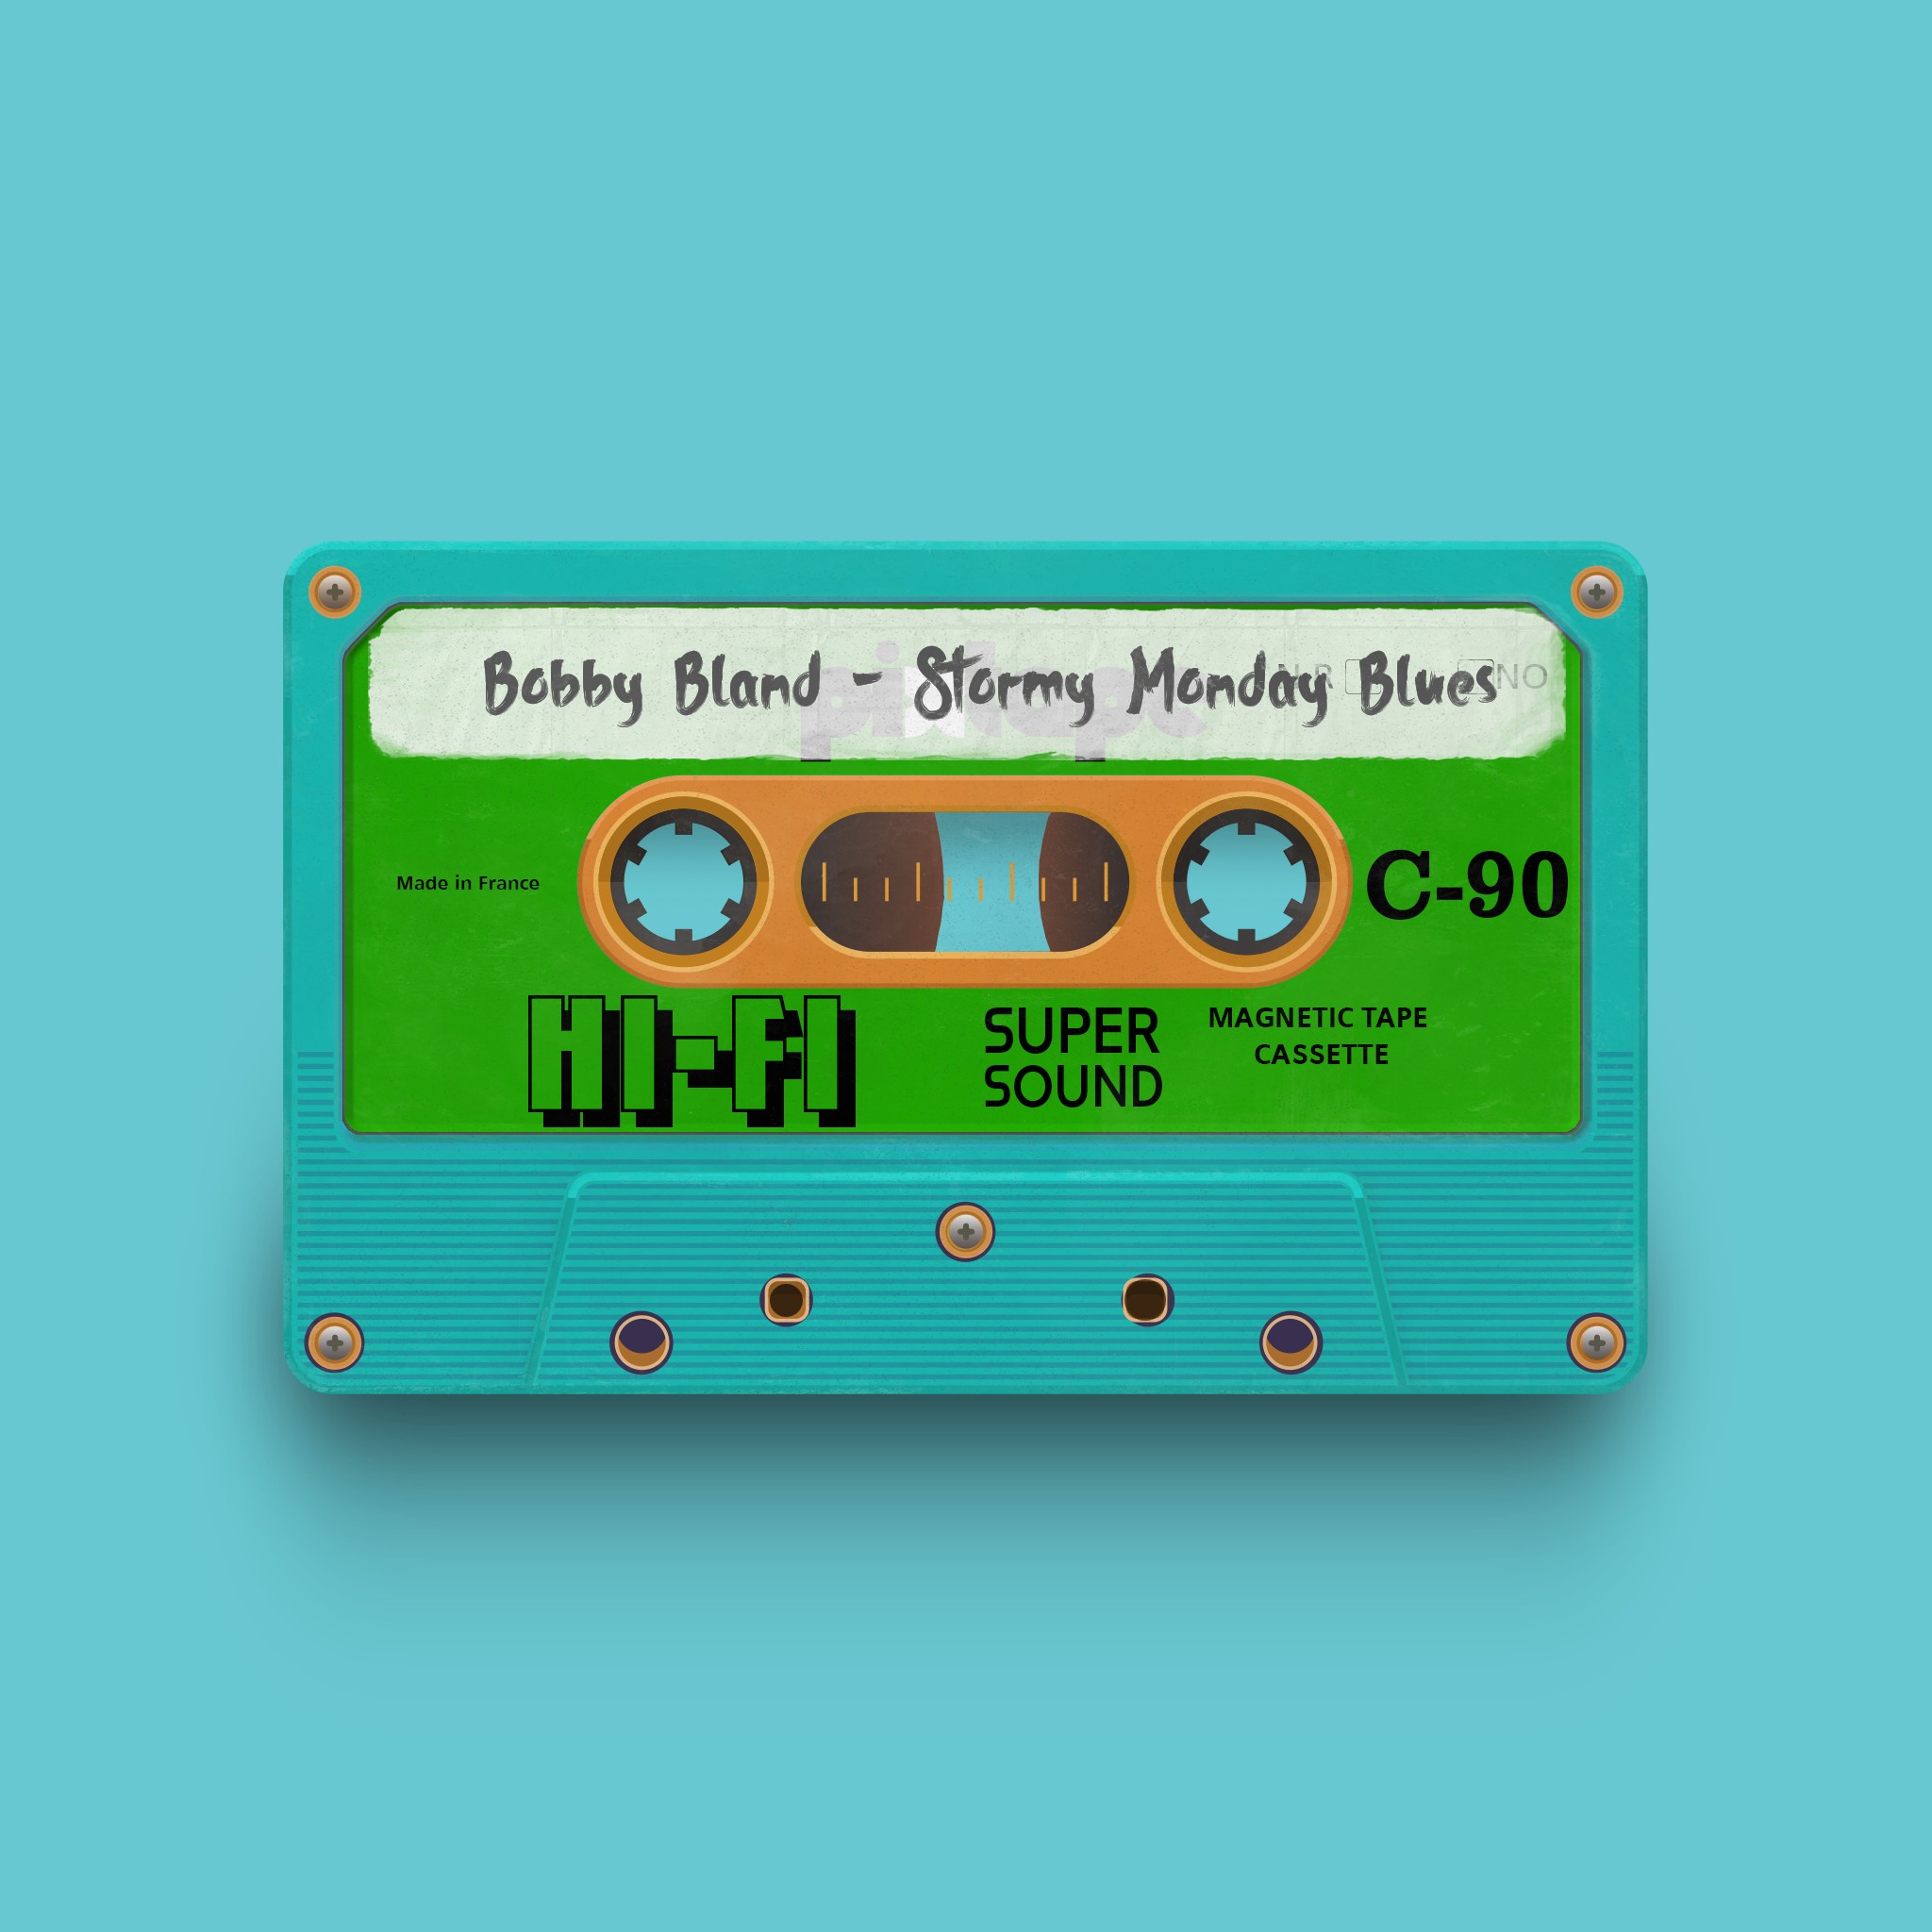 PixTape #81 | Bobby Bland - Stormy Monday Blues